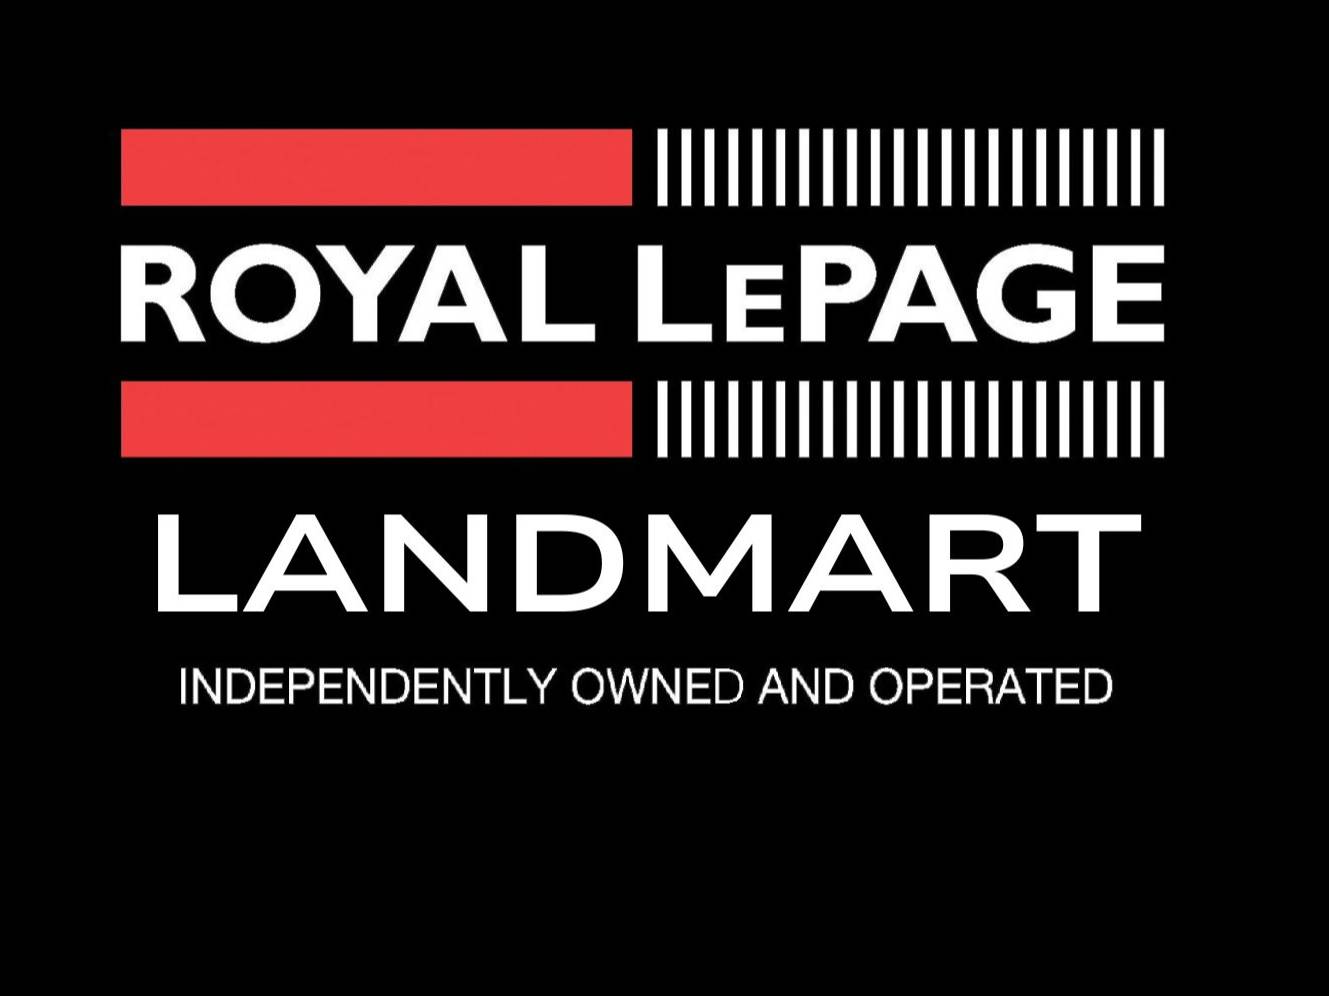 Royal LePage Landmart - 451 MAIN STREET NORTH, MOOSE JAW, SK, S6H 0W5